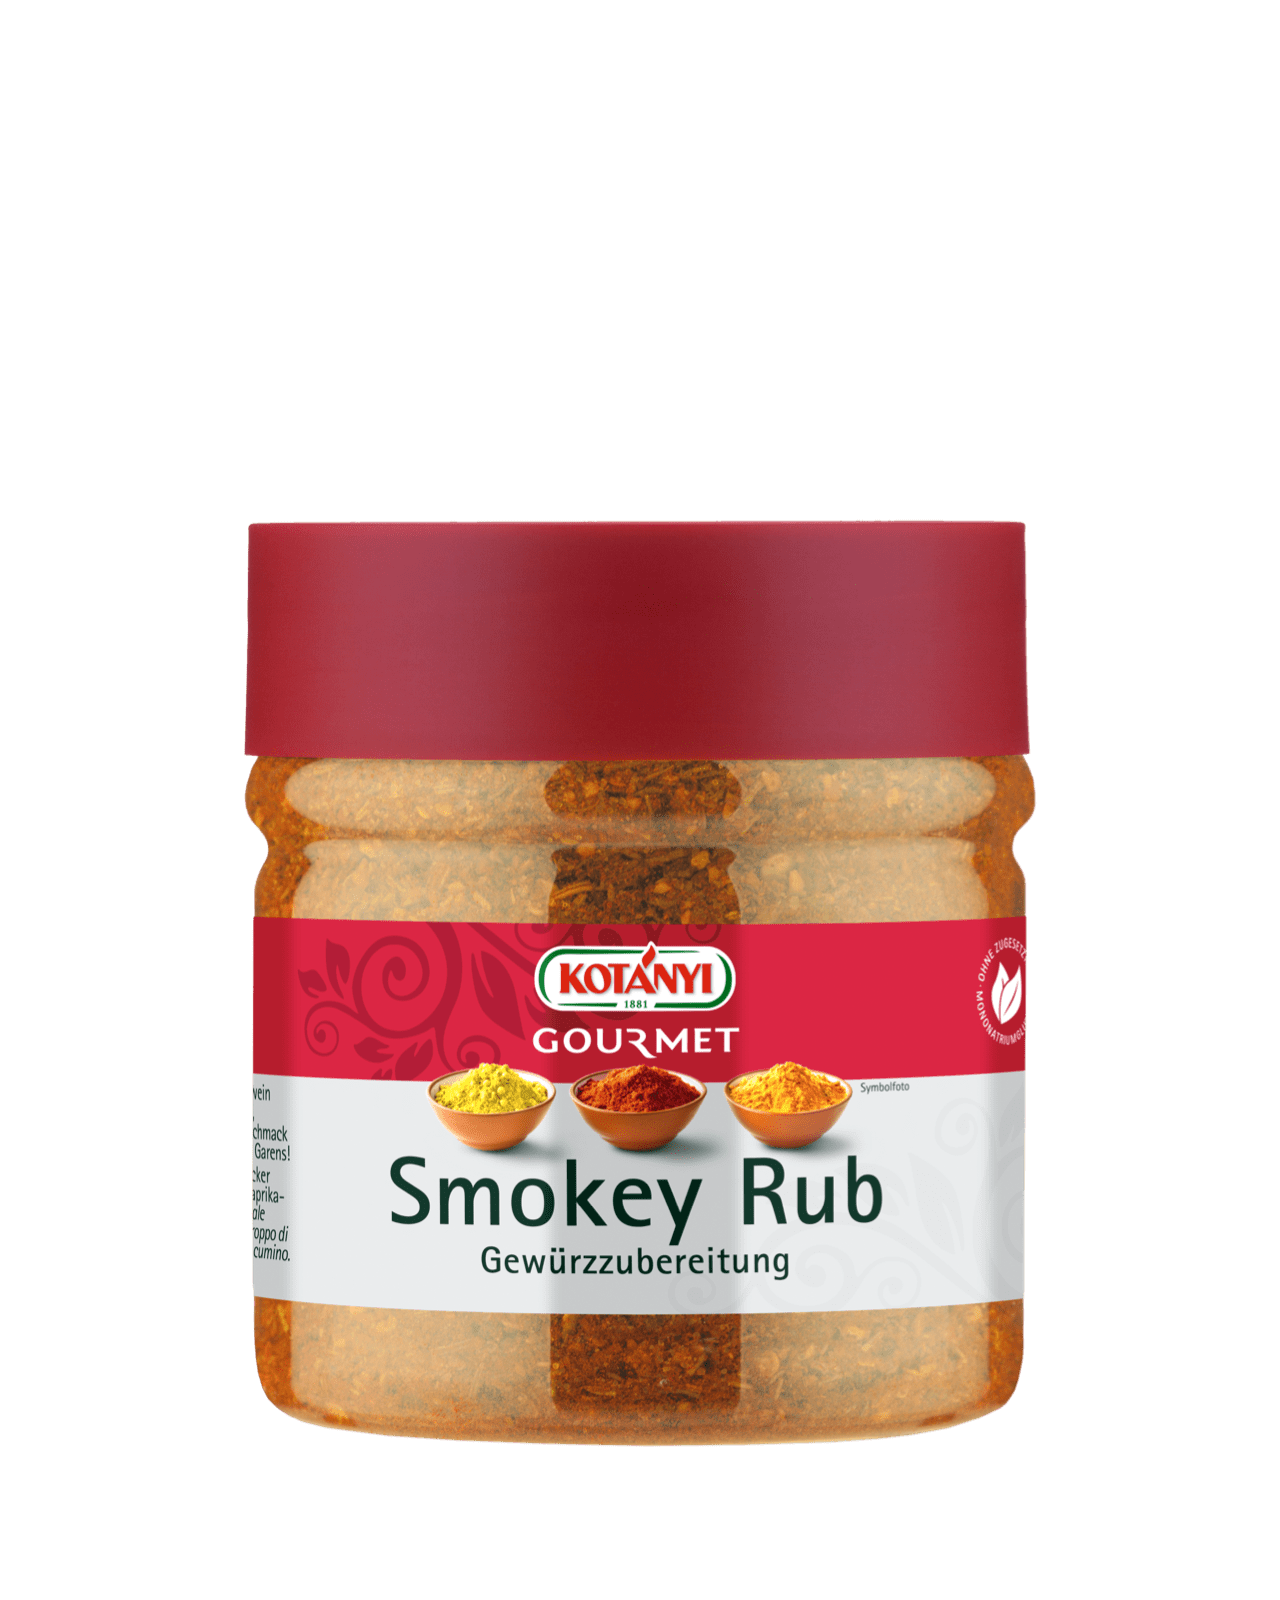 Kotányi Gourmet Smokey Rub Gewürzzubereitung in der 400ccm Dose